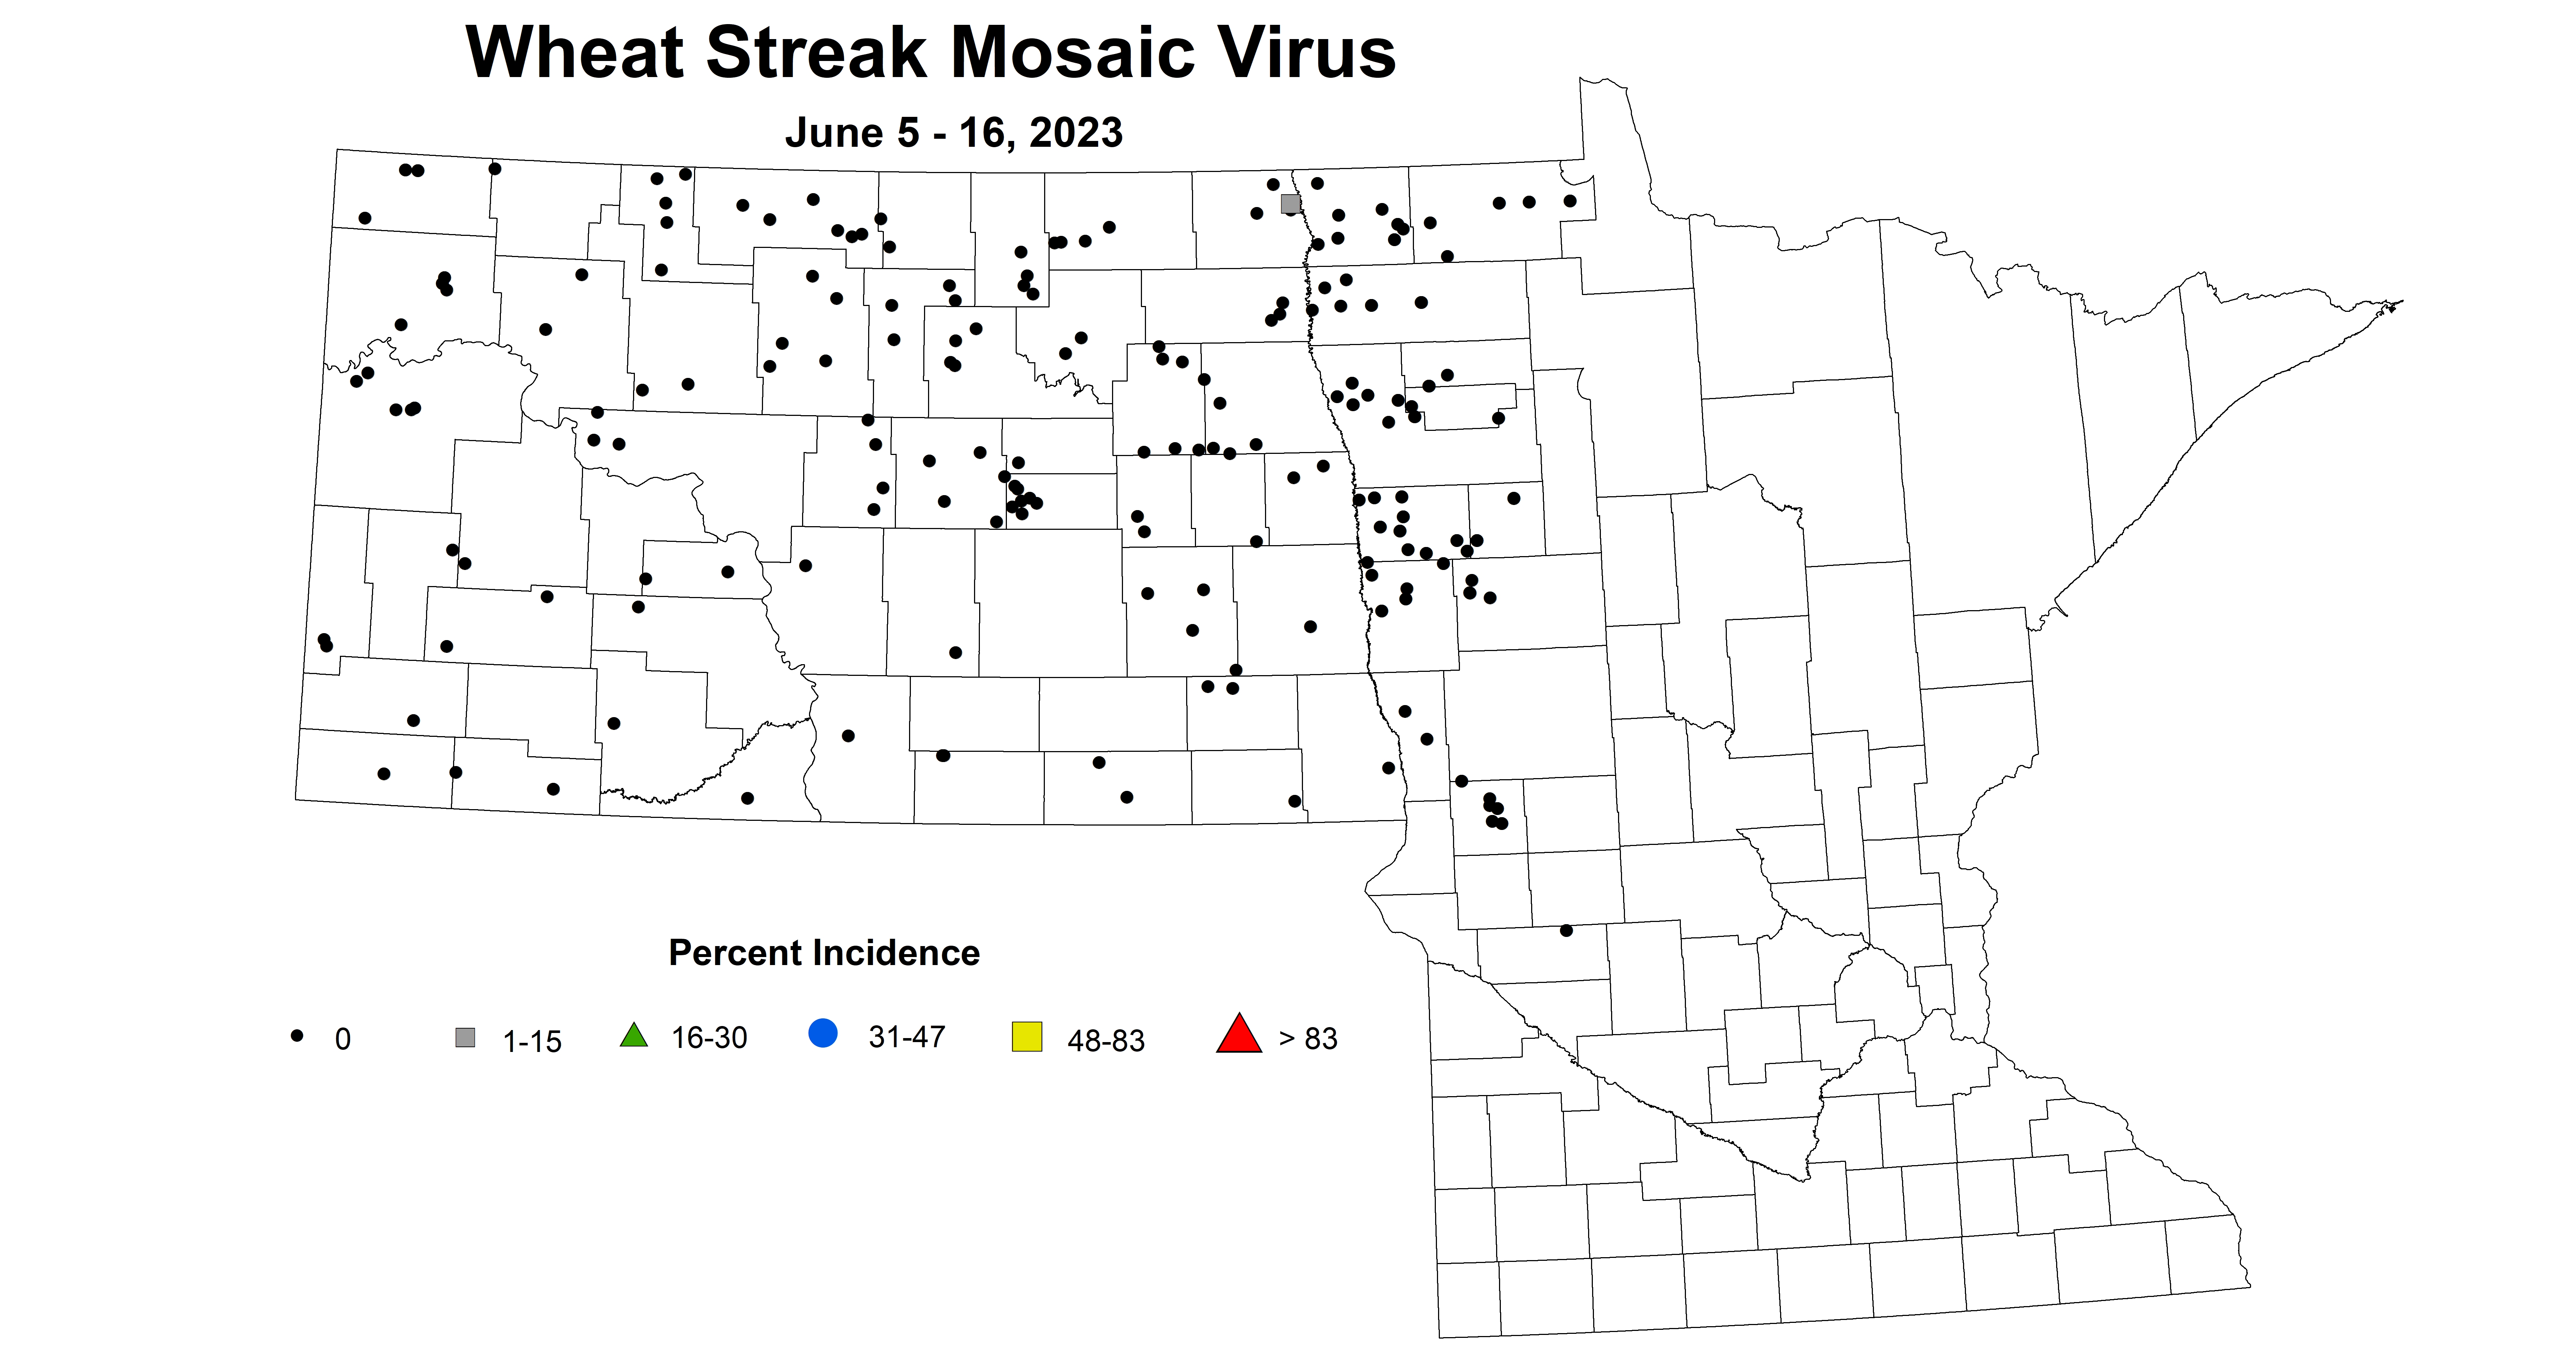 wheat streak mosaic virus June 5-16 2023